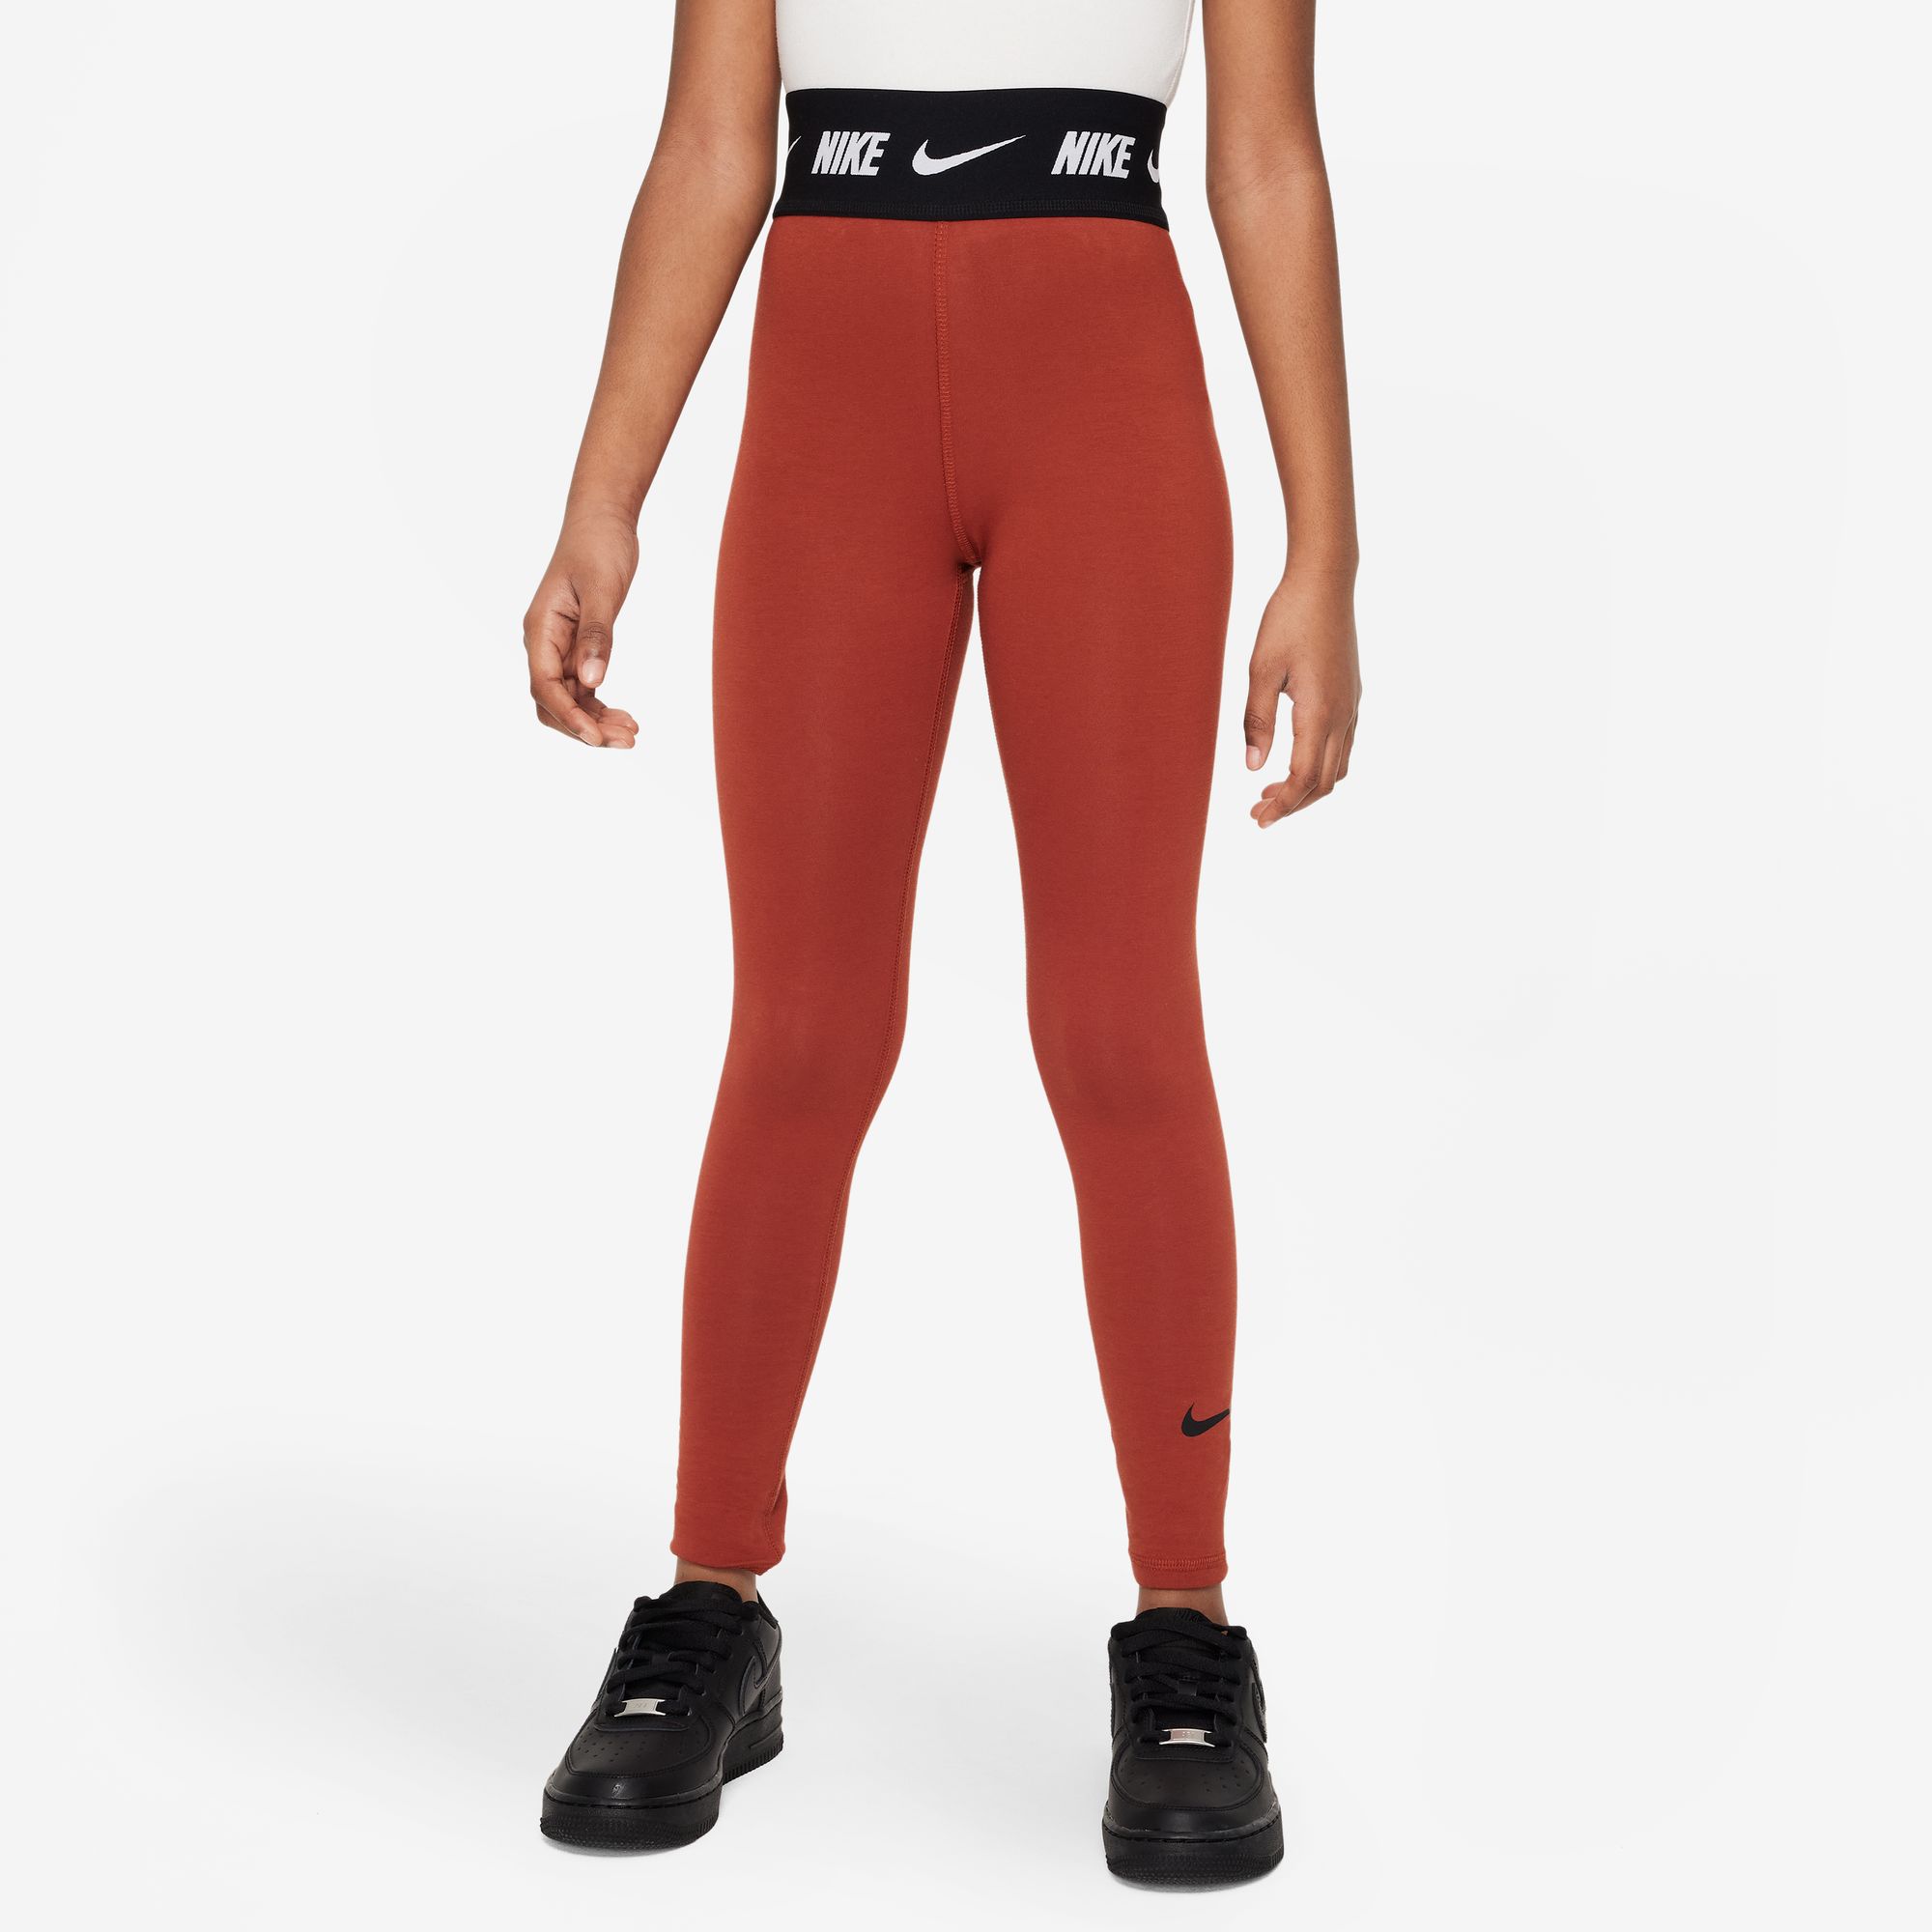 Nike Mädchen Hose G NSW Fav Hw Lggng Sw, Rugged Orange/Black, FN7779-832, S